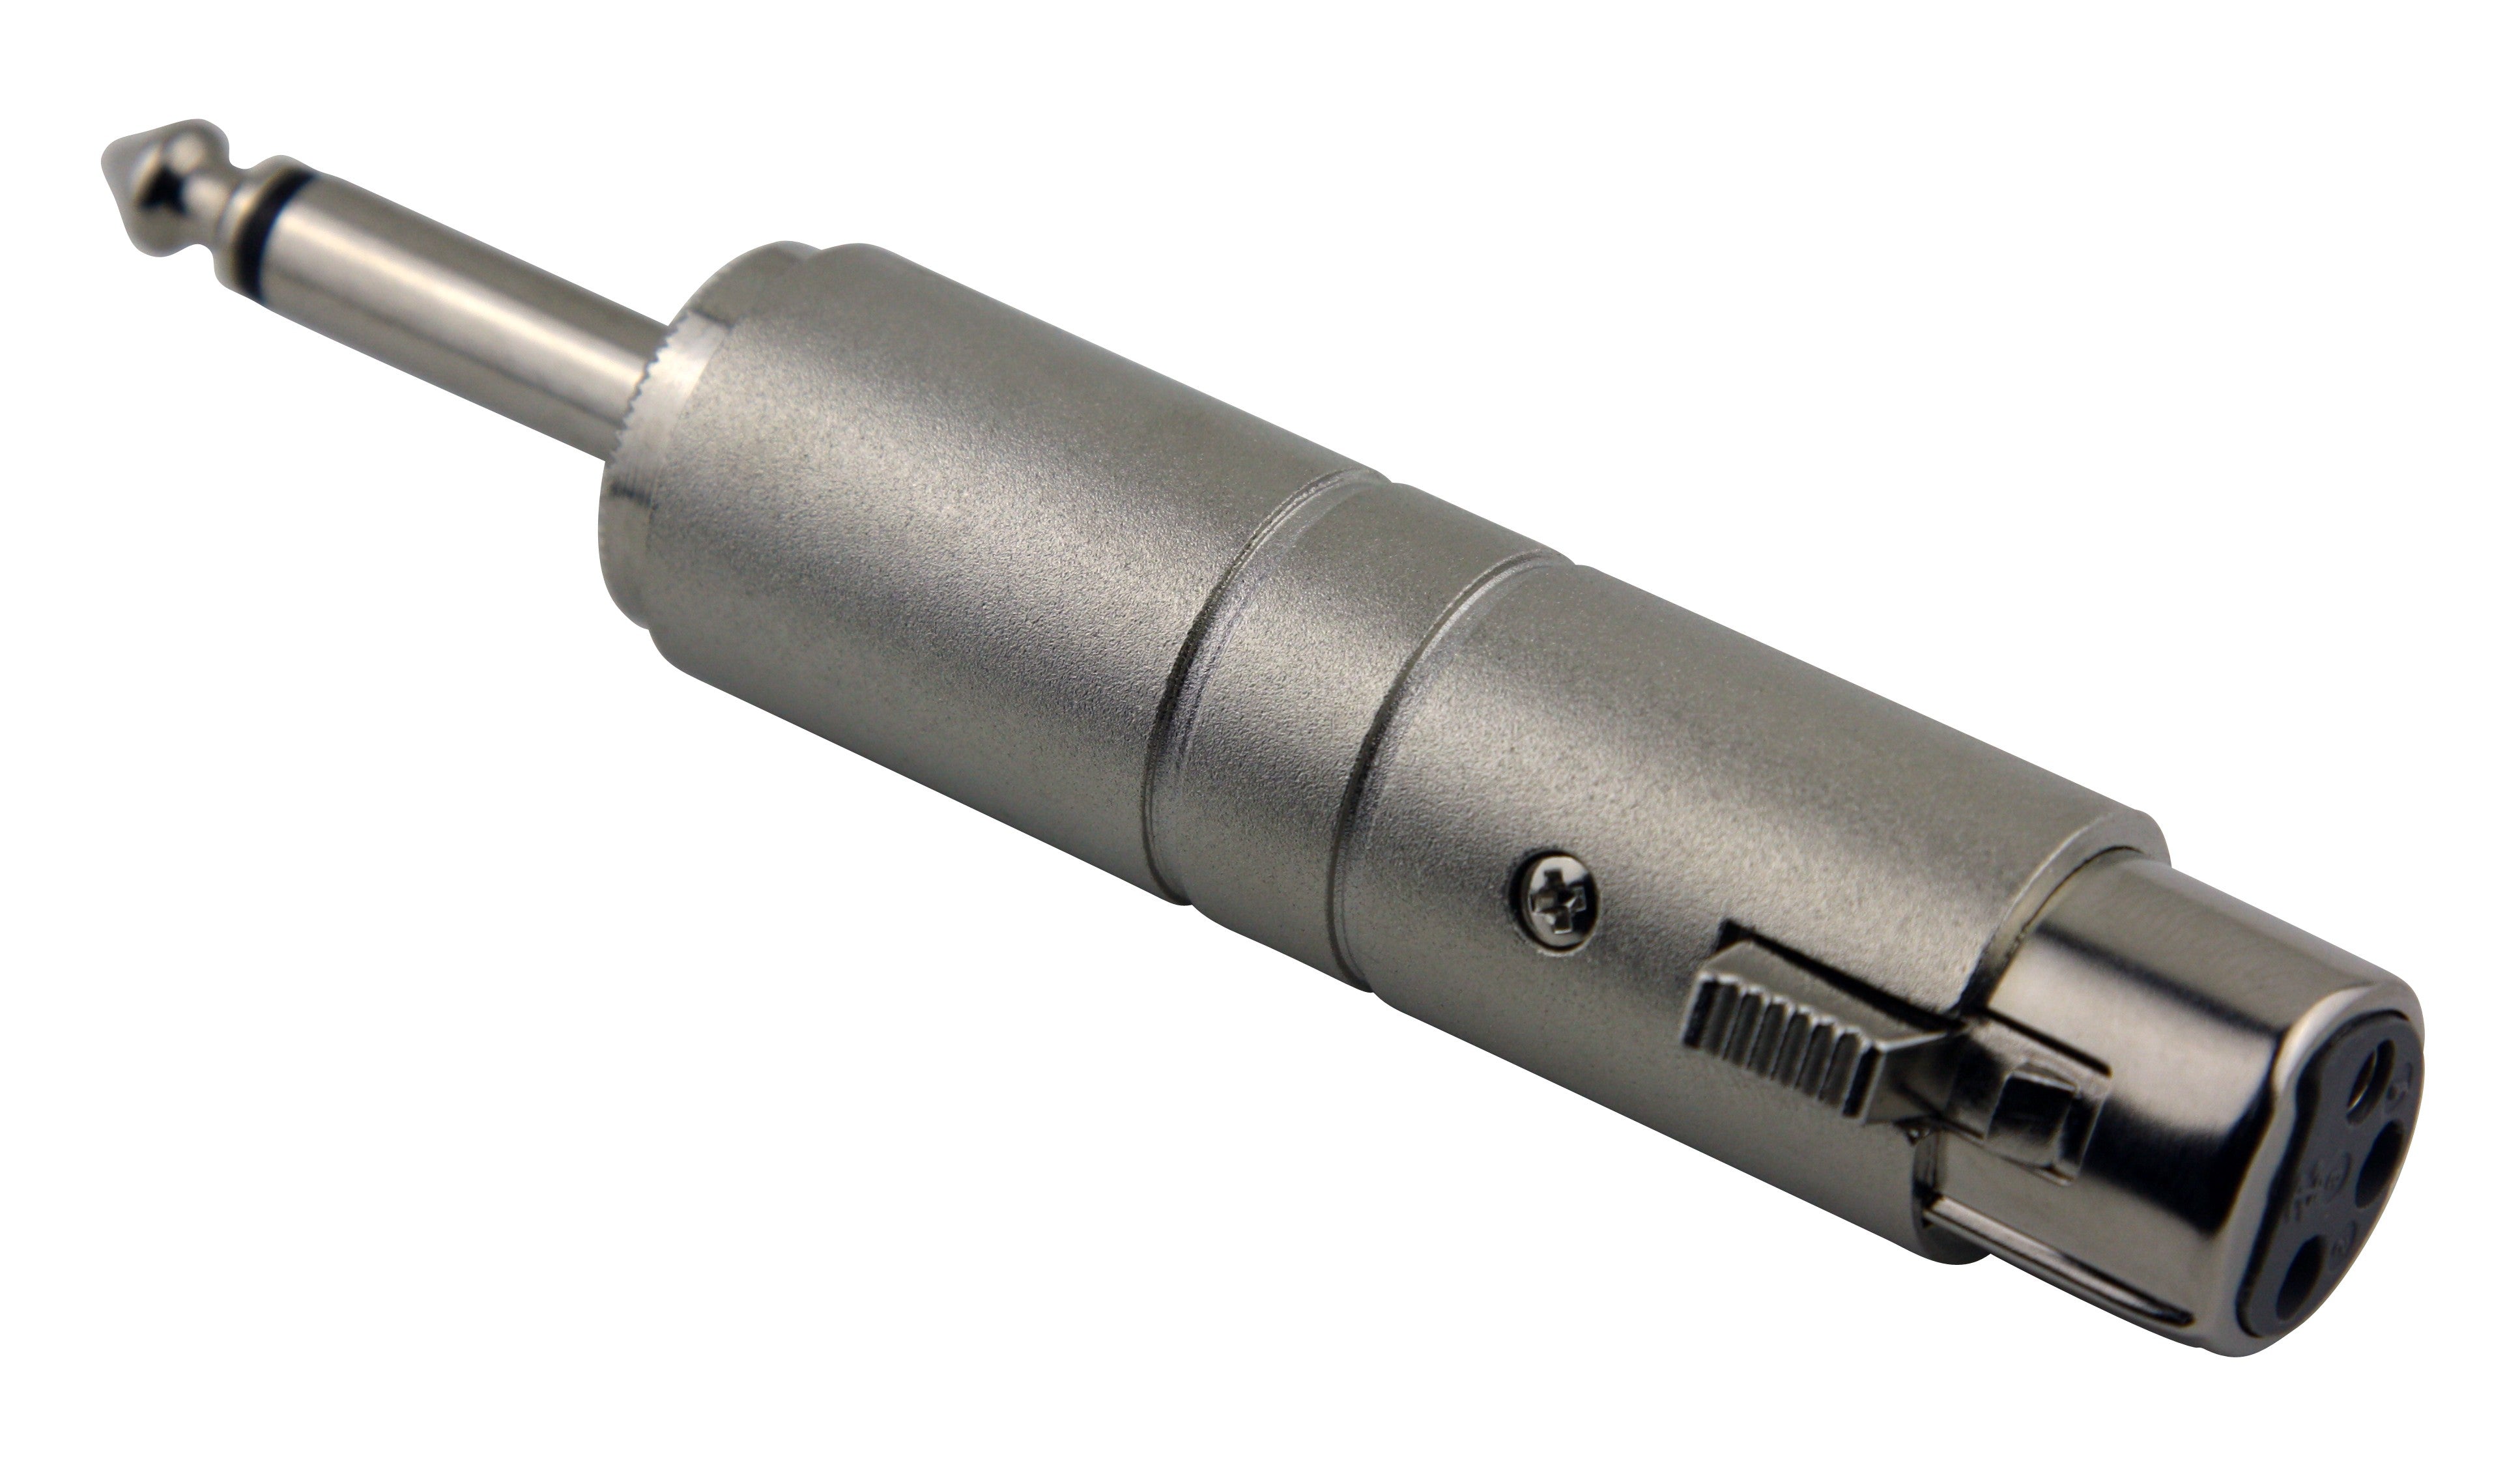 Pig Hog Solutions - 1/4(F) - 3.5mm(M) Mono Adapter